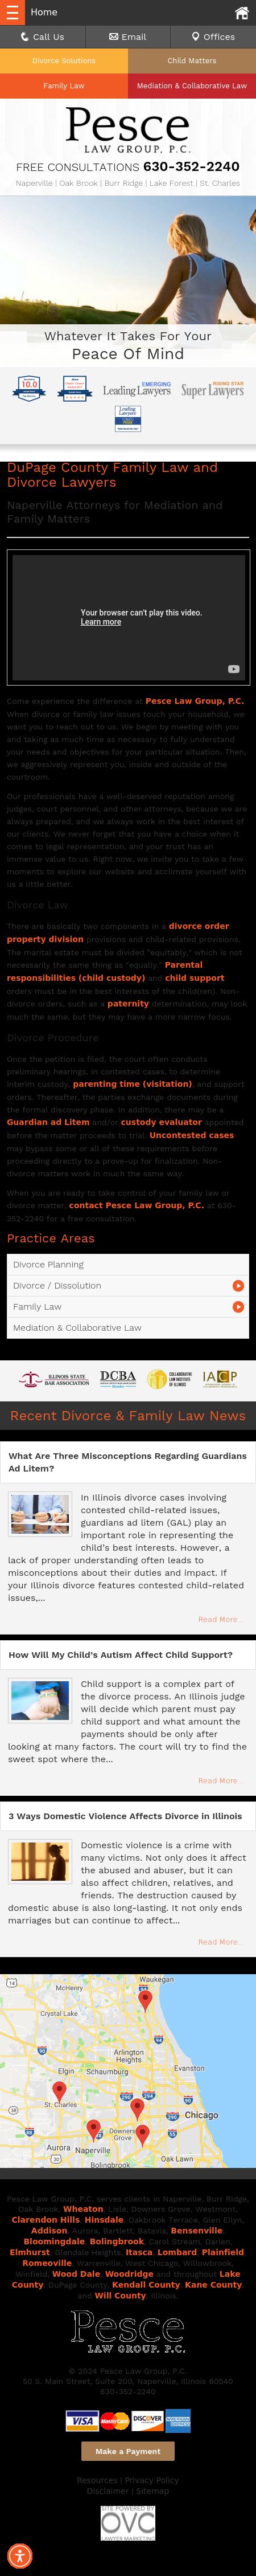 Pesce Law Group, P.C. - Naperville IL Lawyers